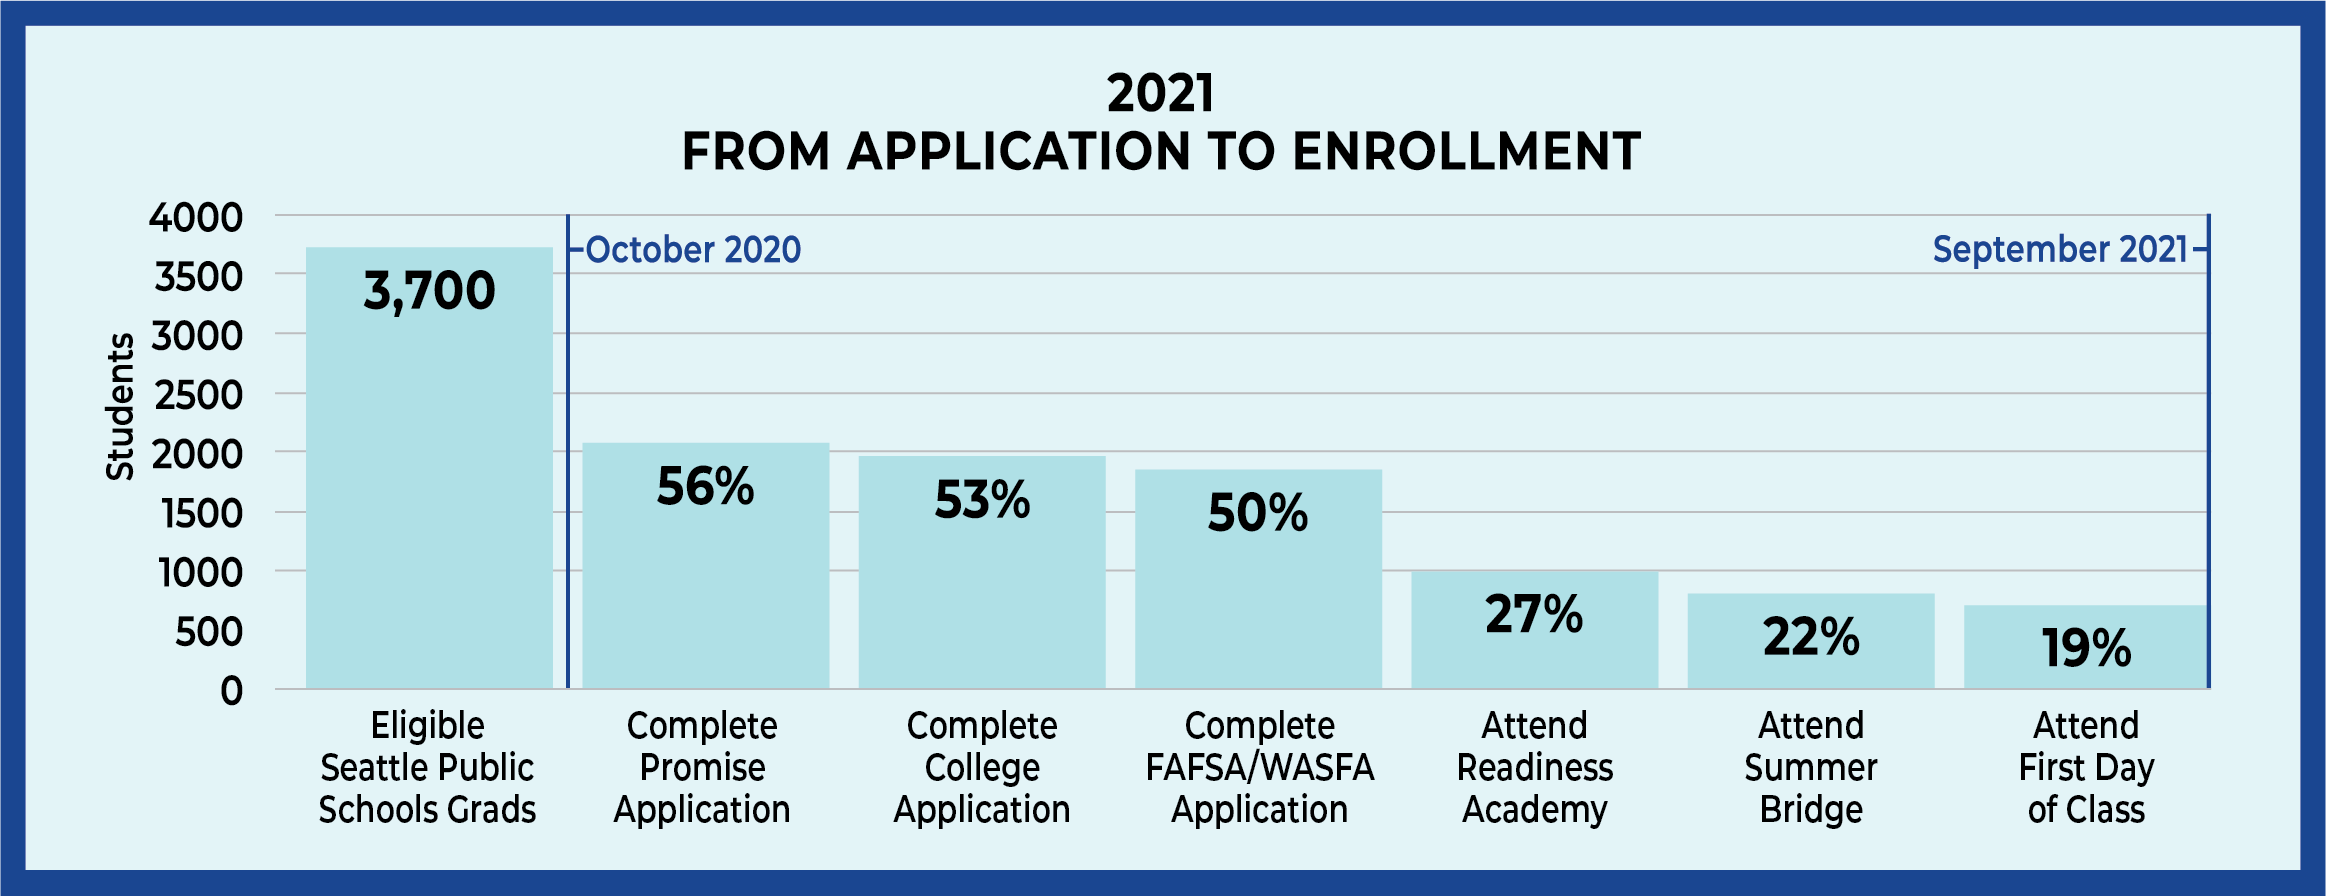 Application to Enrollment data 2021